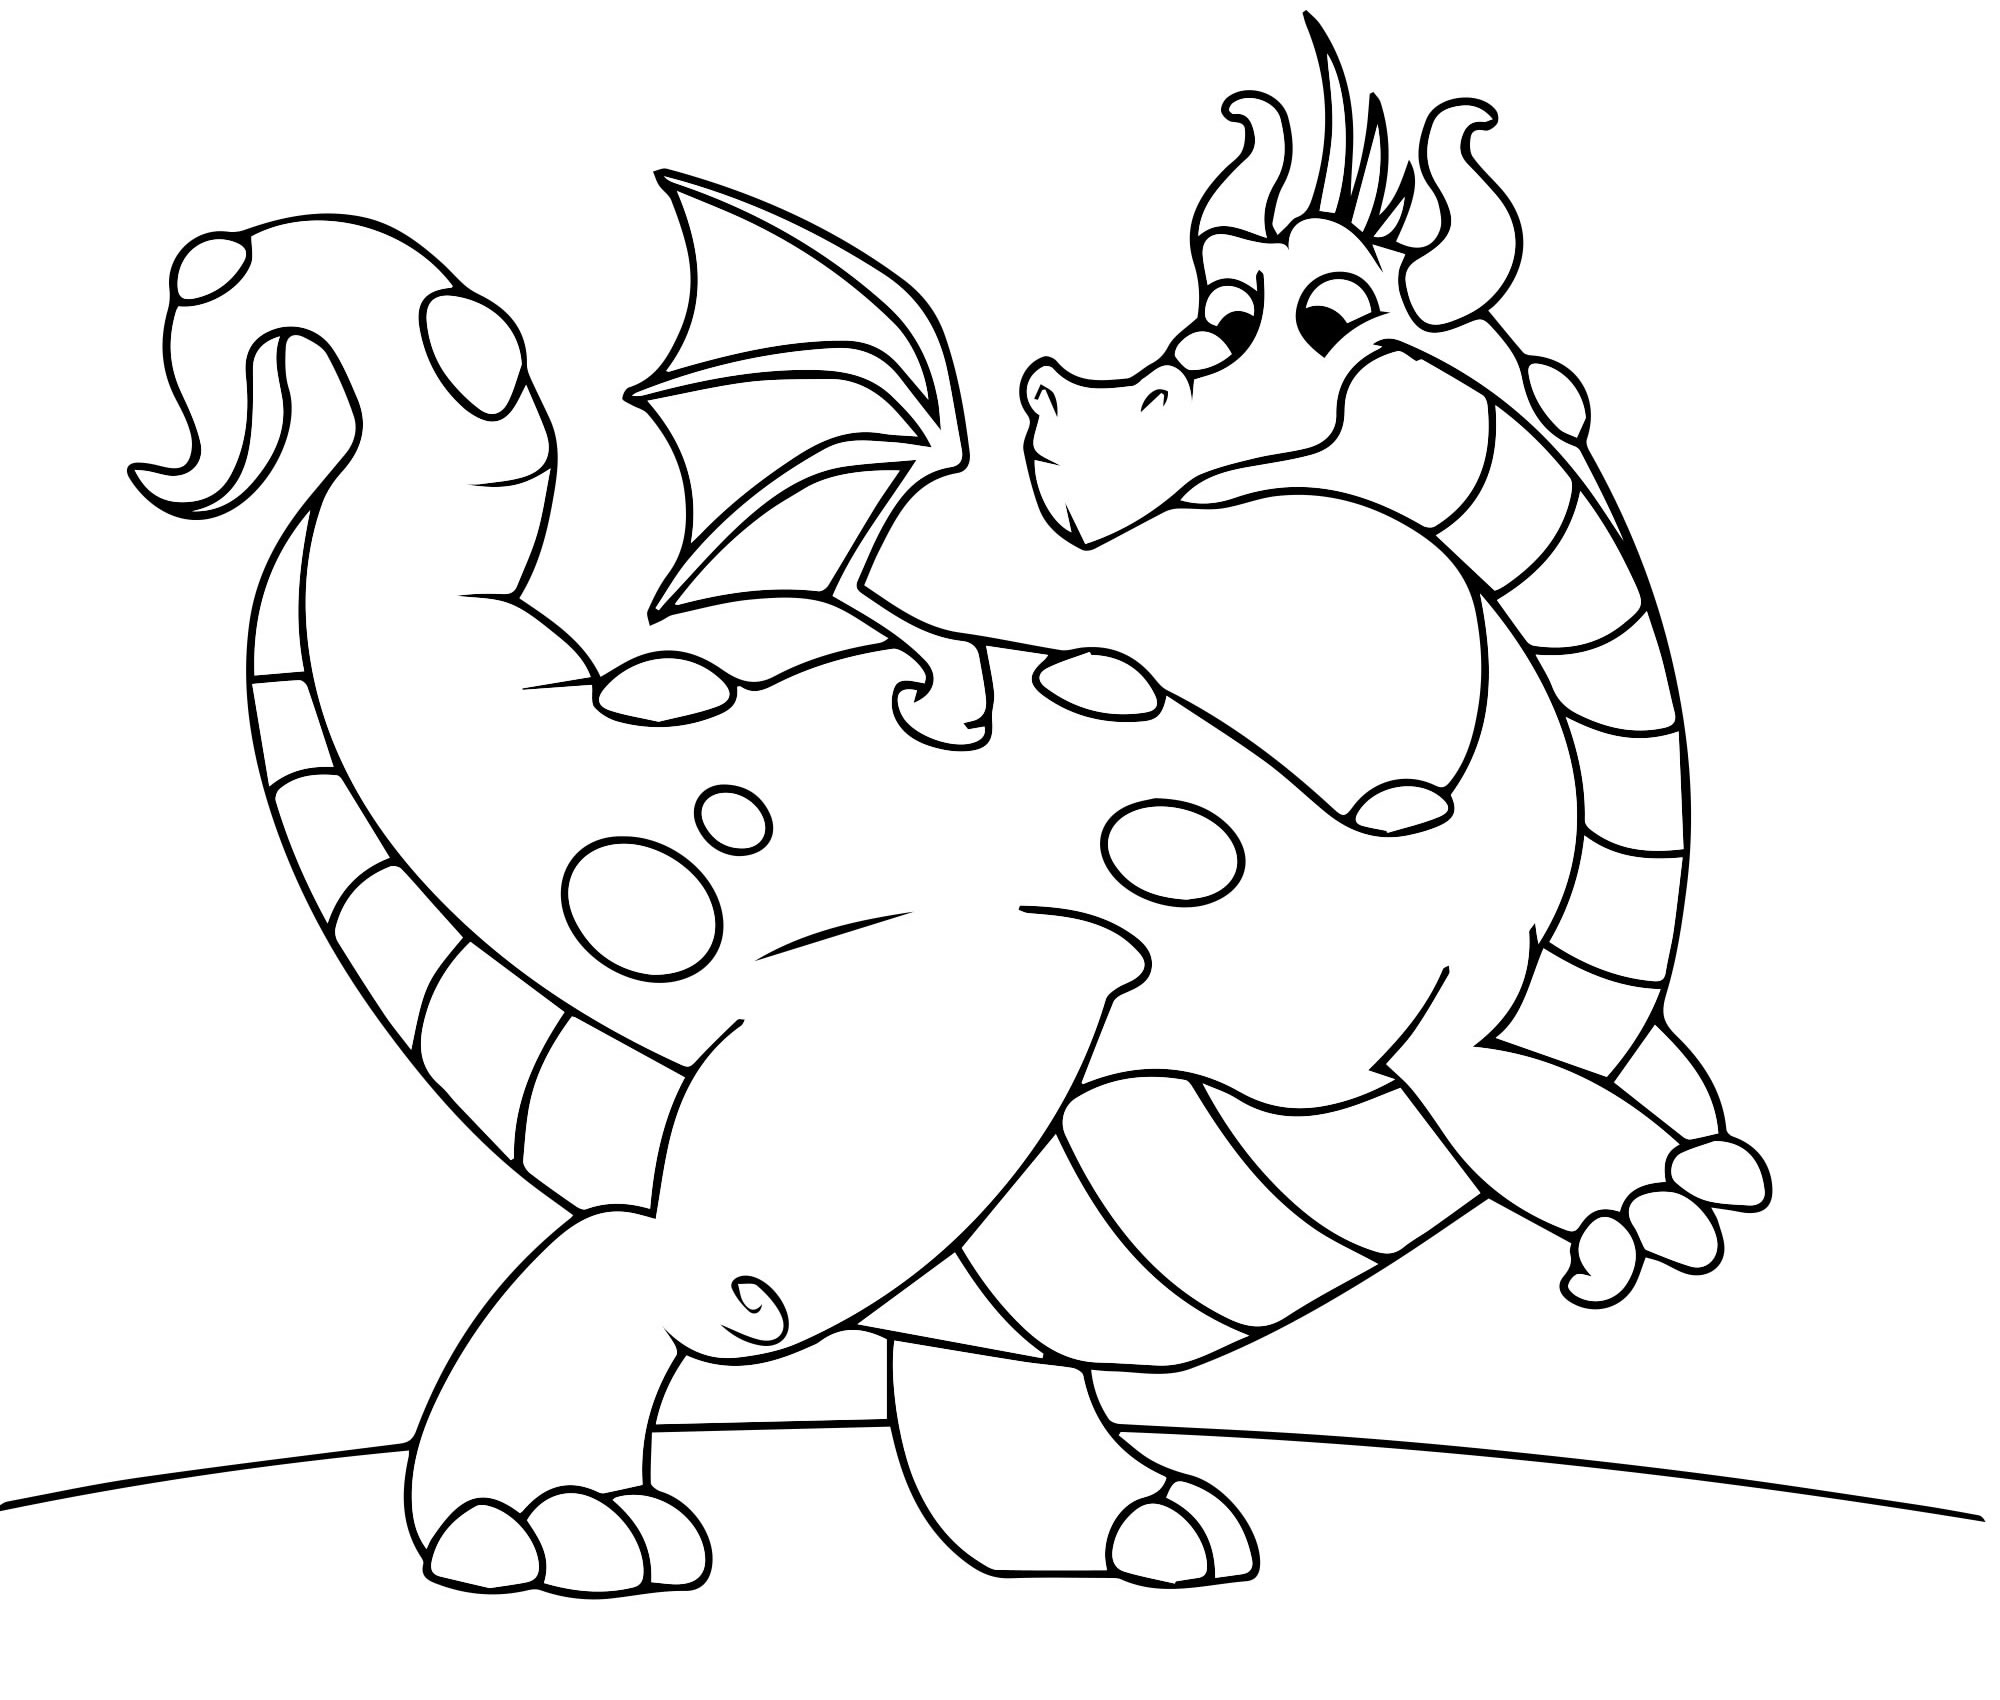 Unique dragons coloring pages for kids